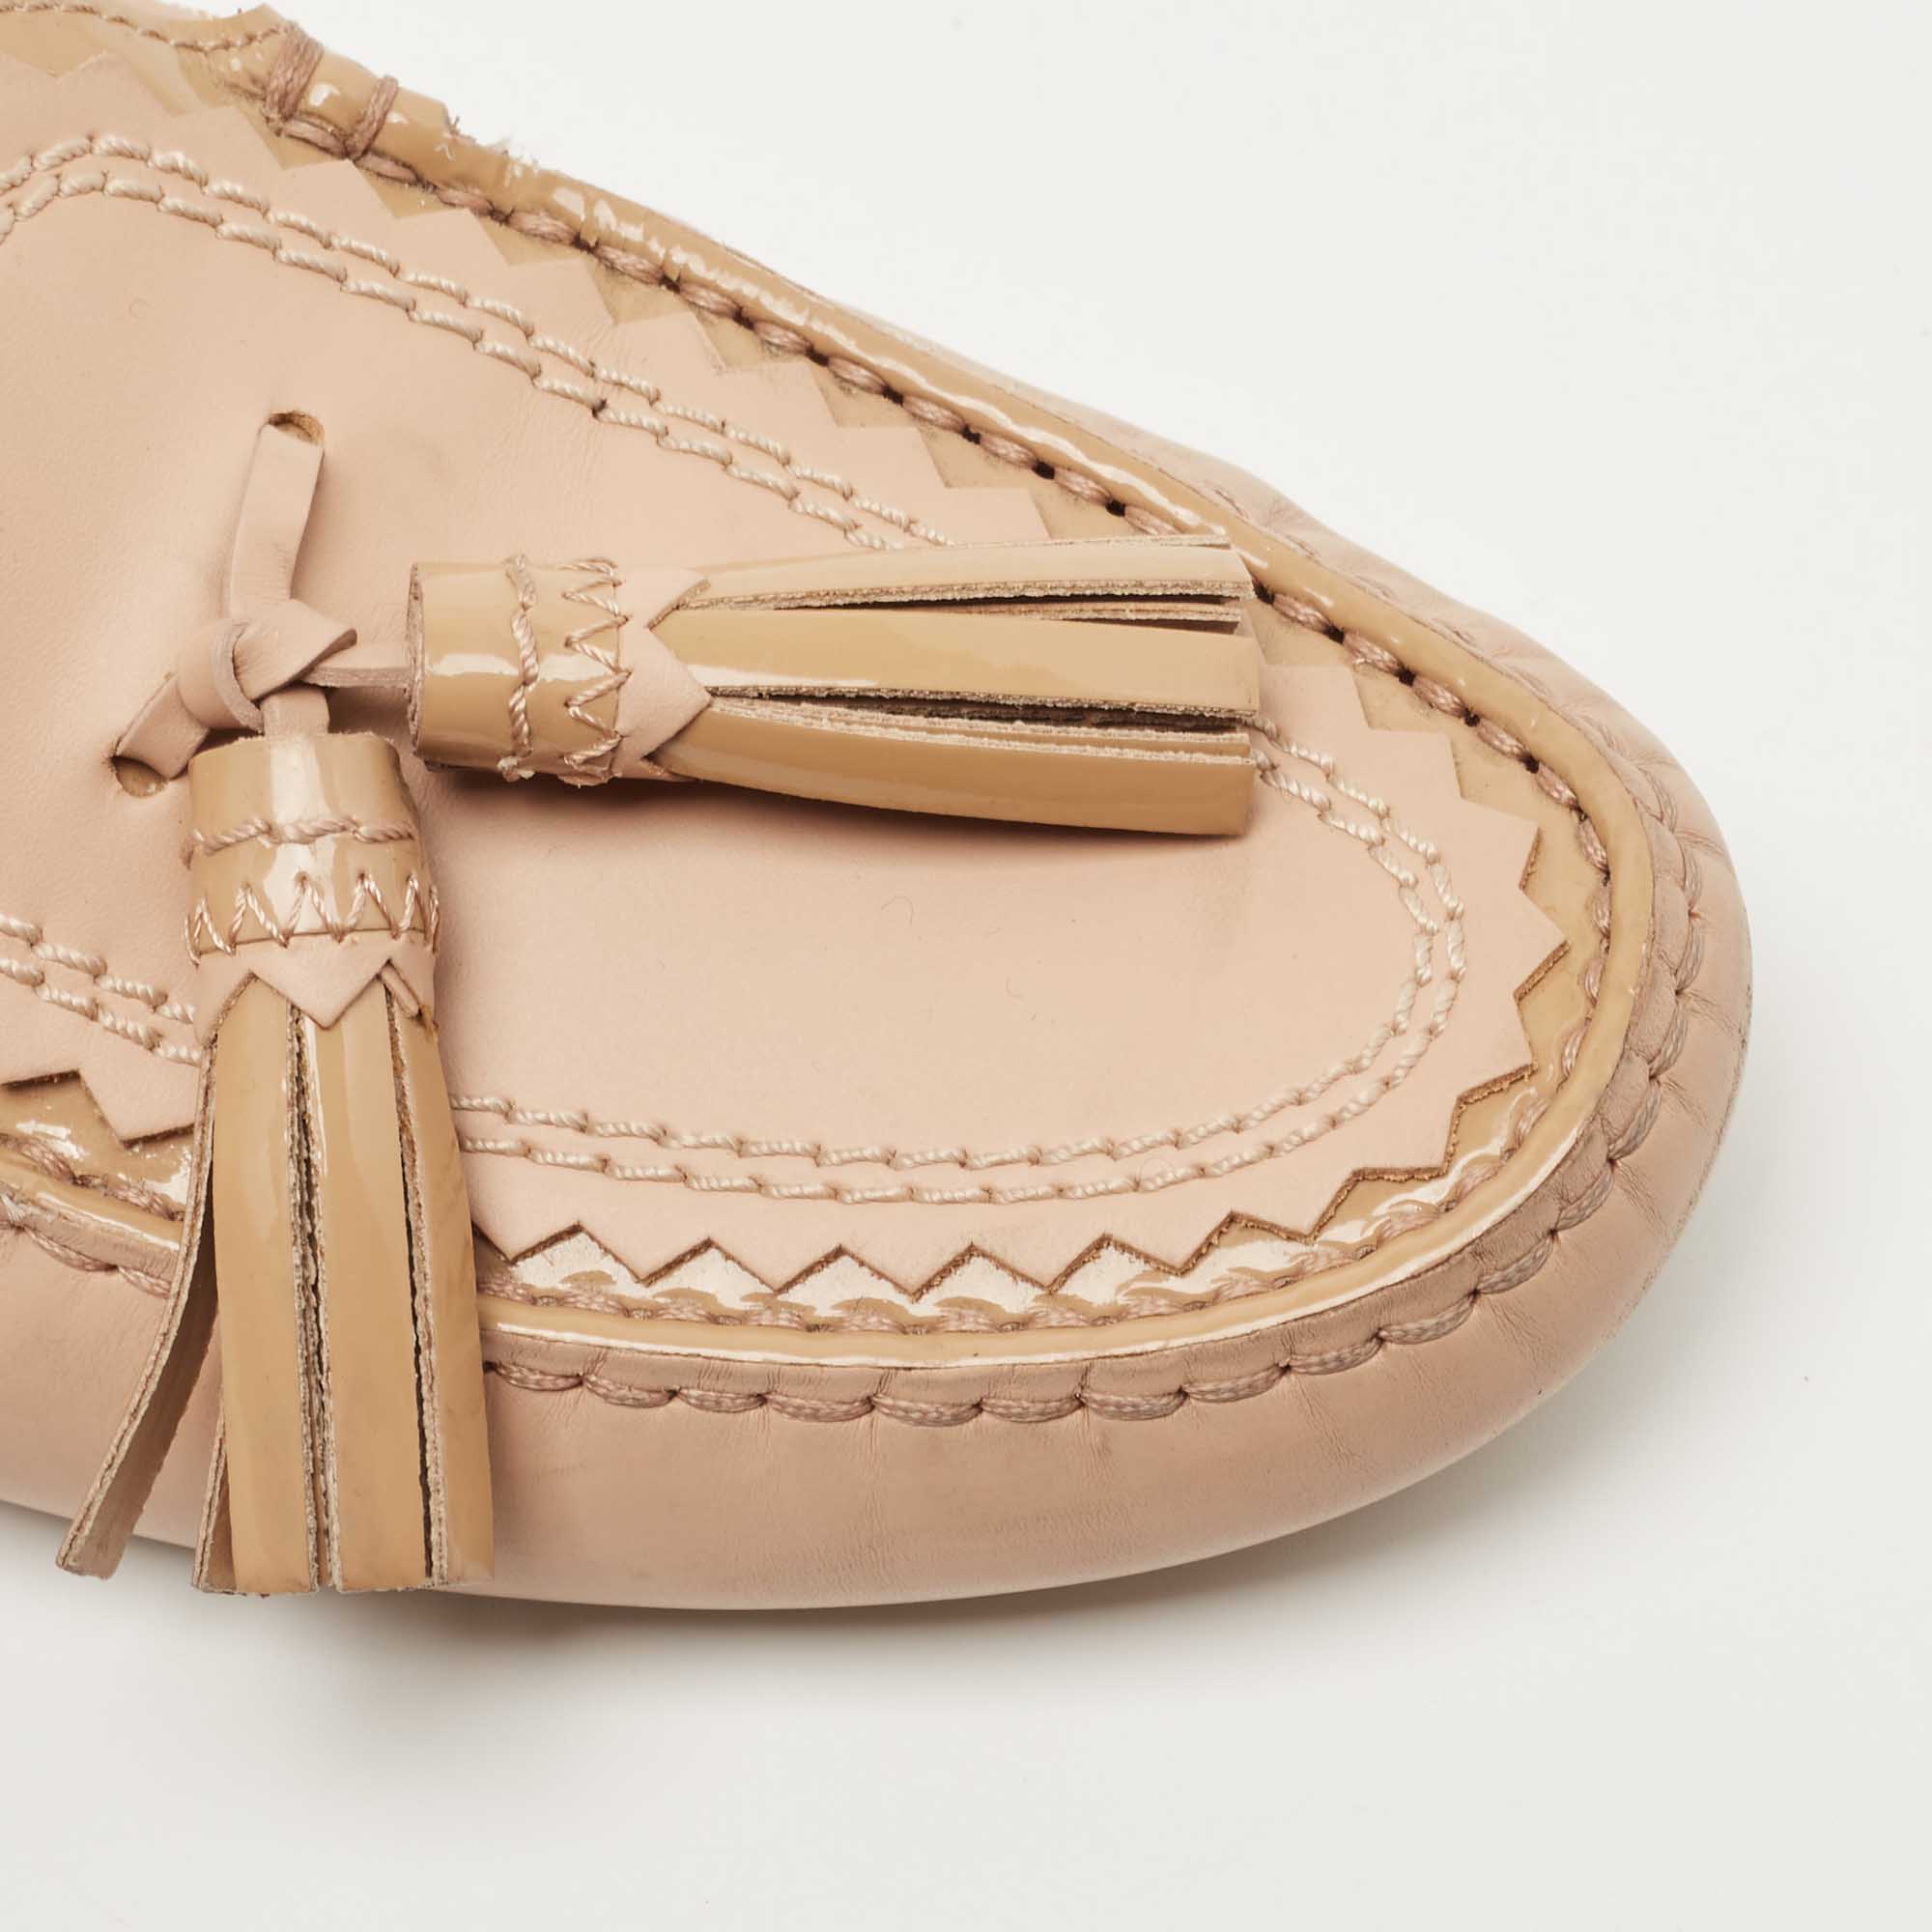 Tod's Beige Leather Tassel Detail Slip On Loafers Size 38.5